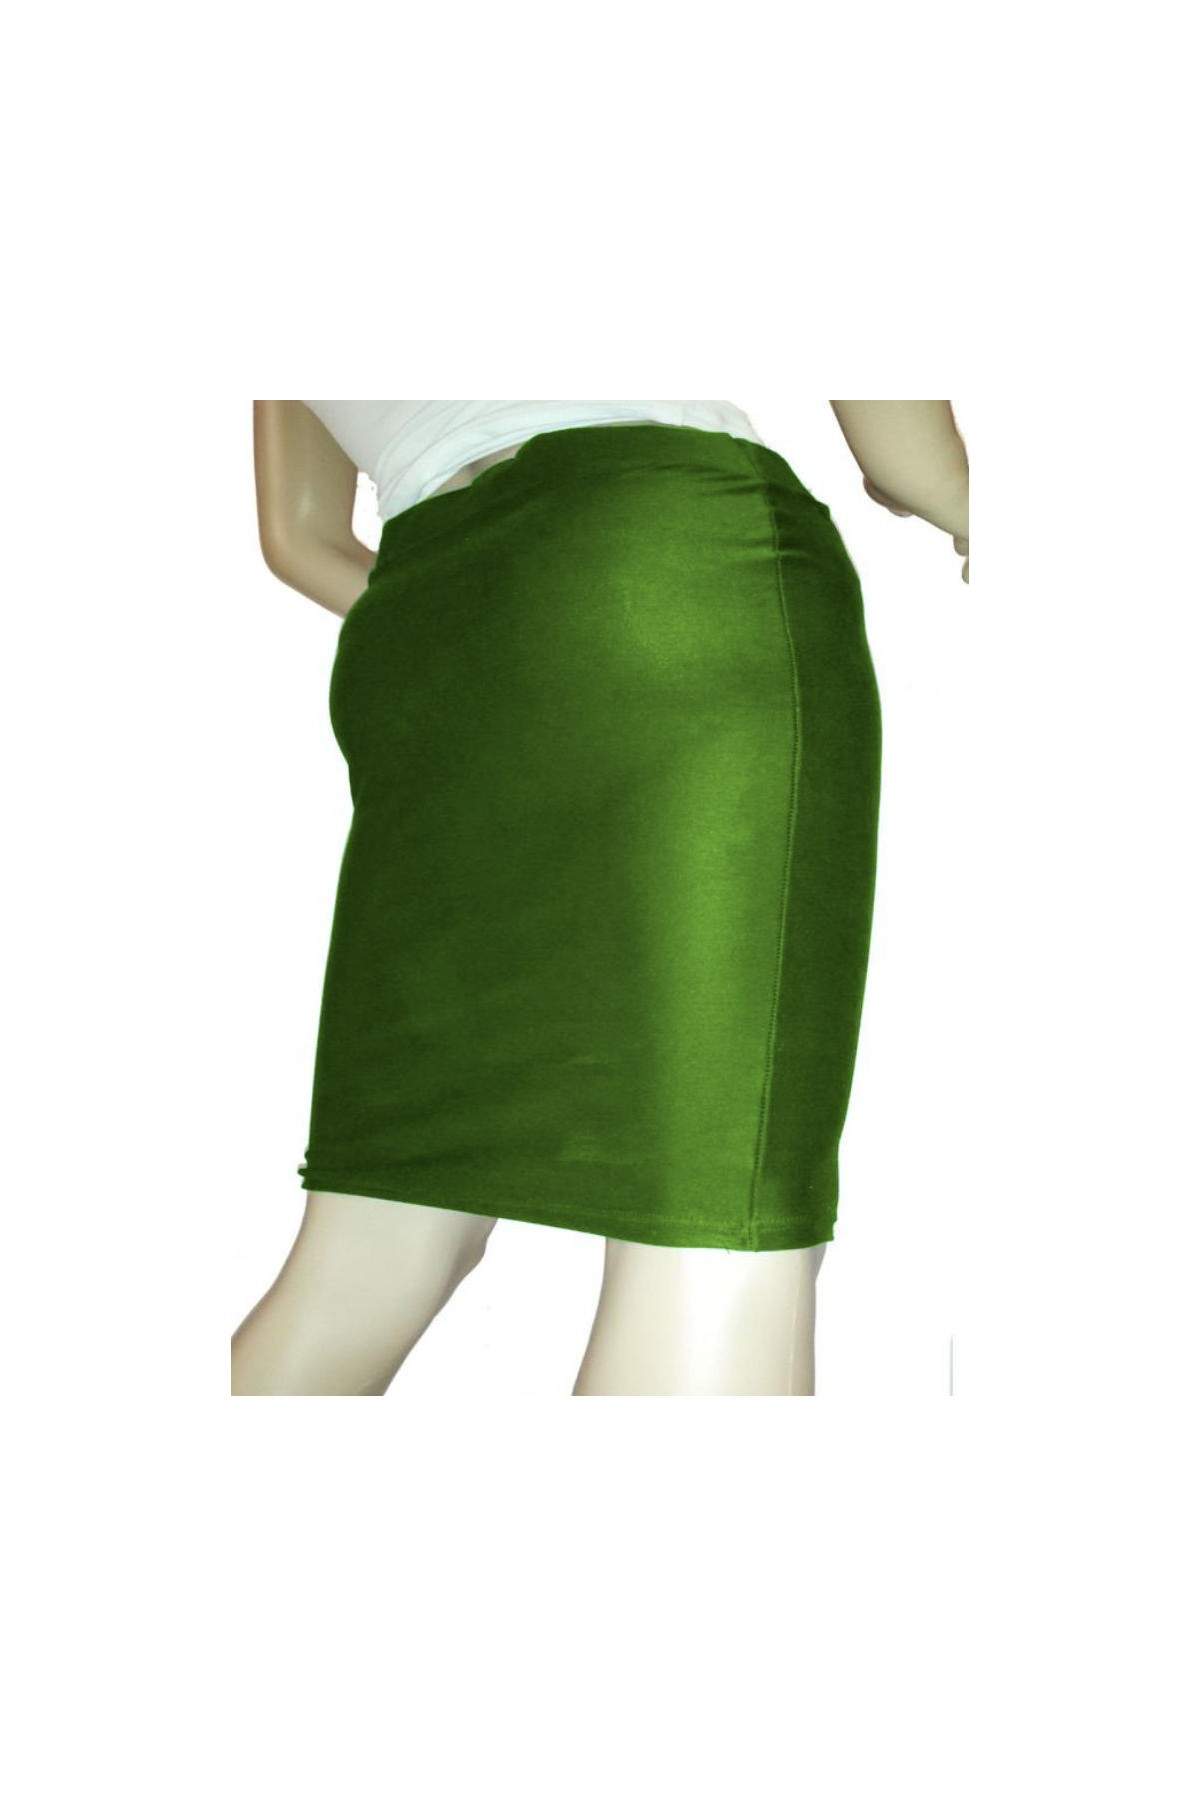 black week Save 15% Green pencil skirt sizes 44 - 52 lengths 25cm -... - 